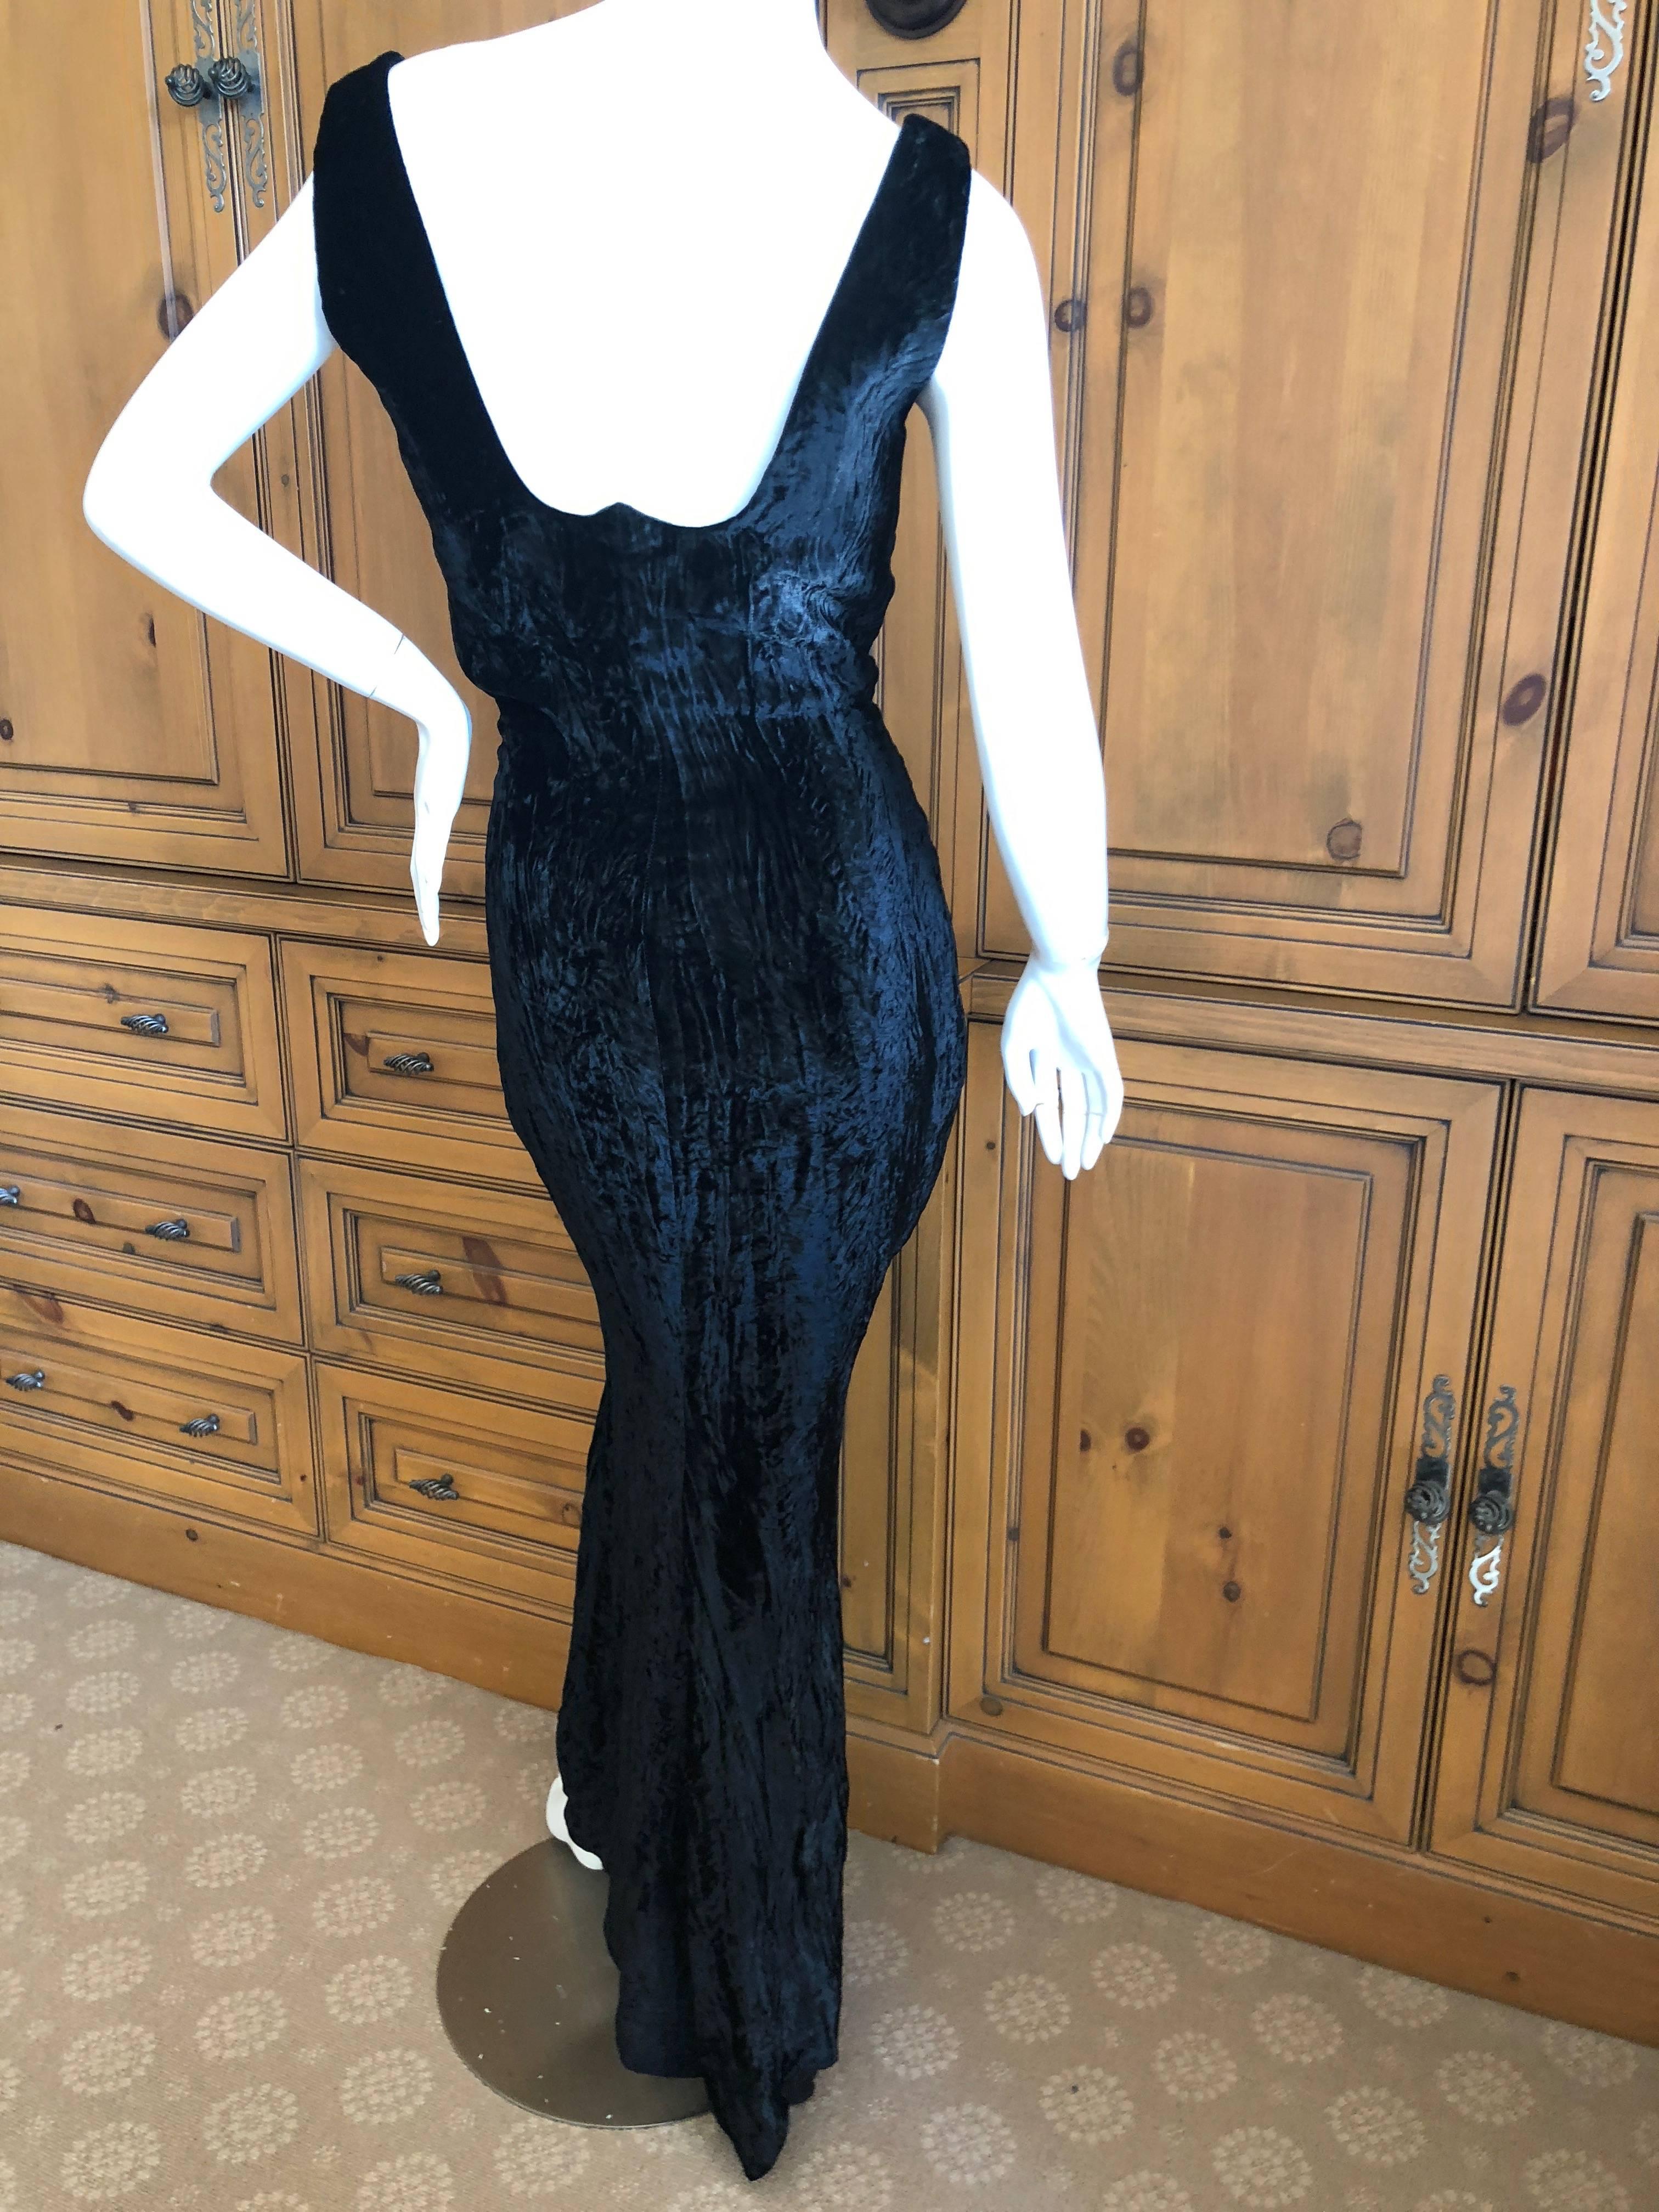 Gianni Versace Couture Vintage 1989 Textured Black Velvet  Evening Dress For Sale 2